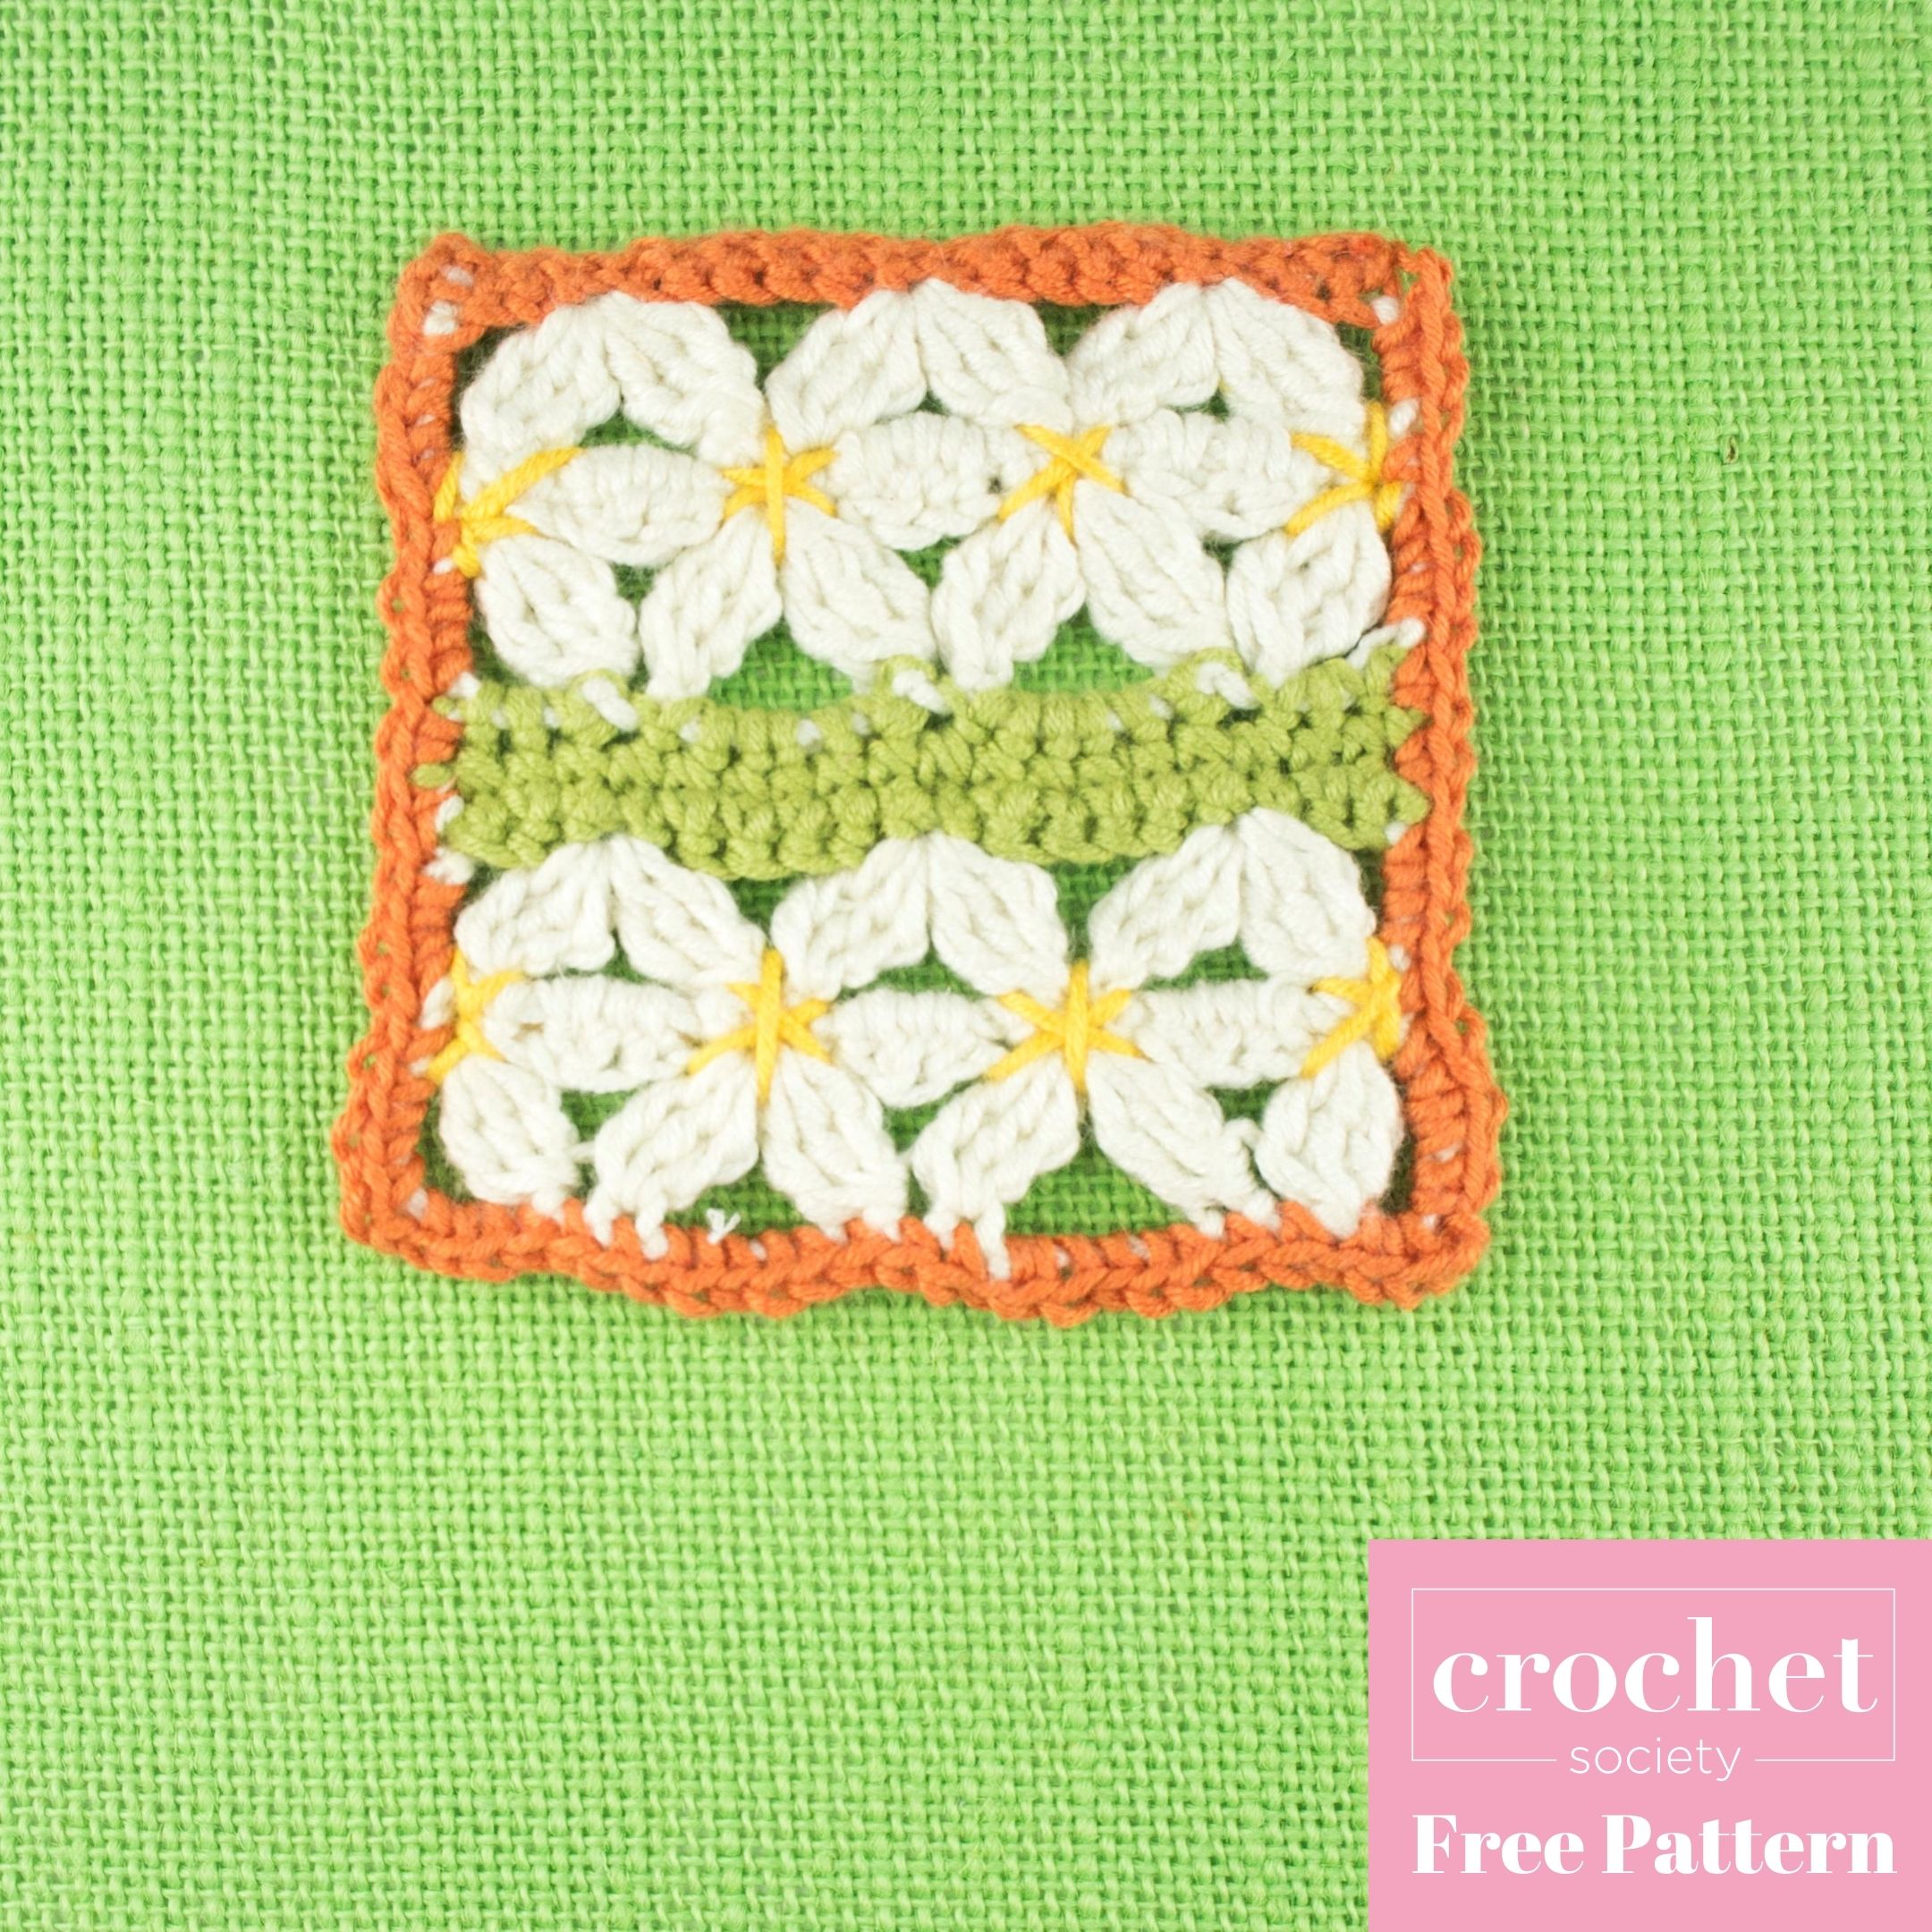 FREE crochet pattern: floral granny square